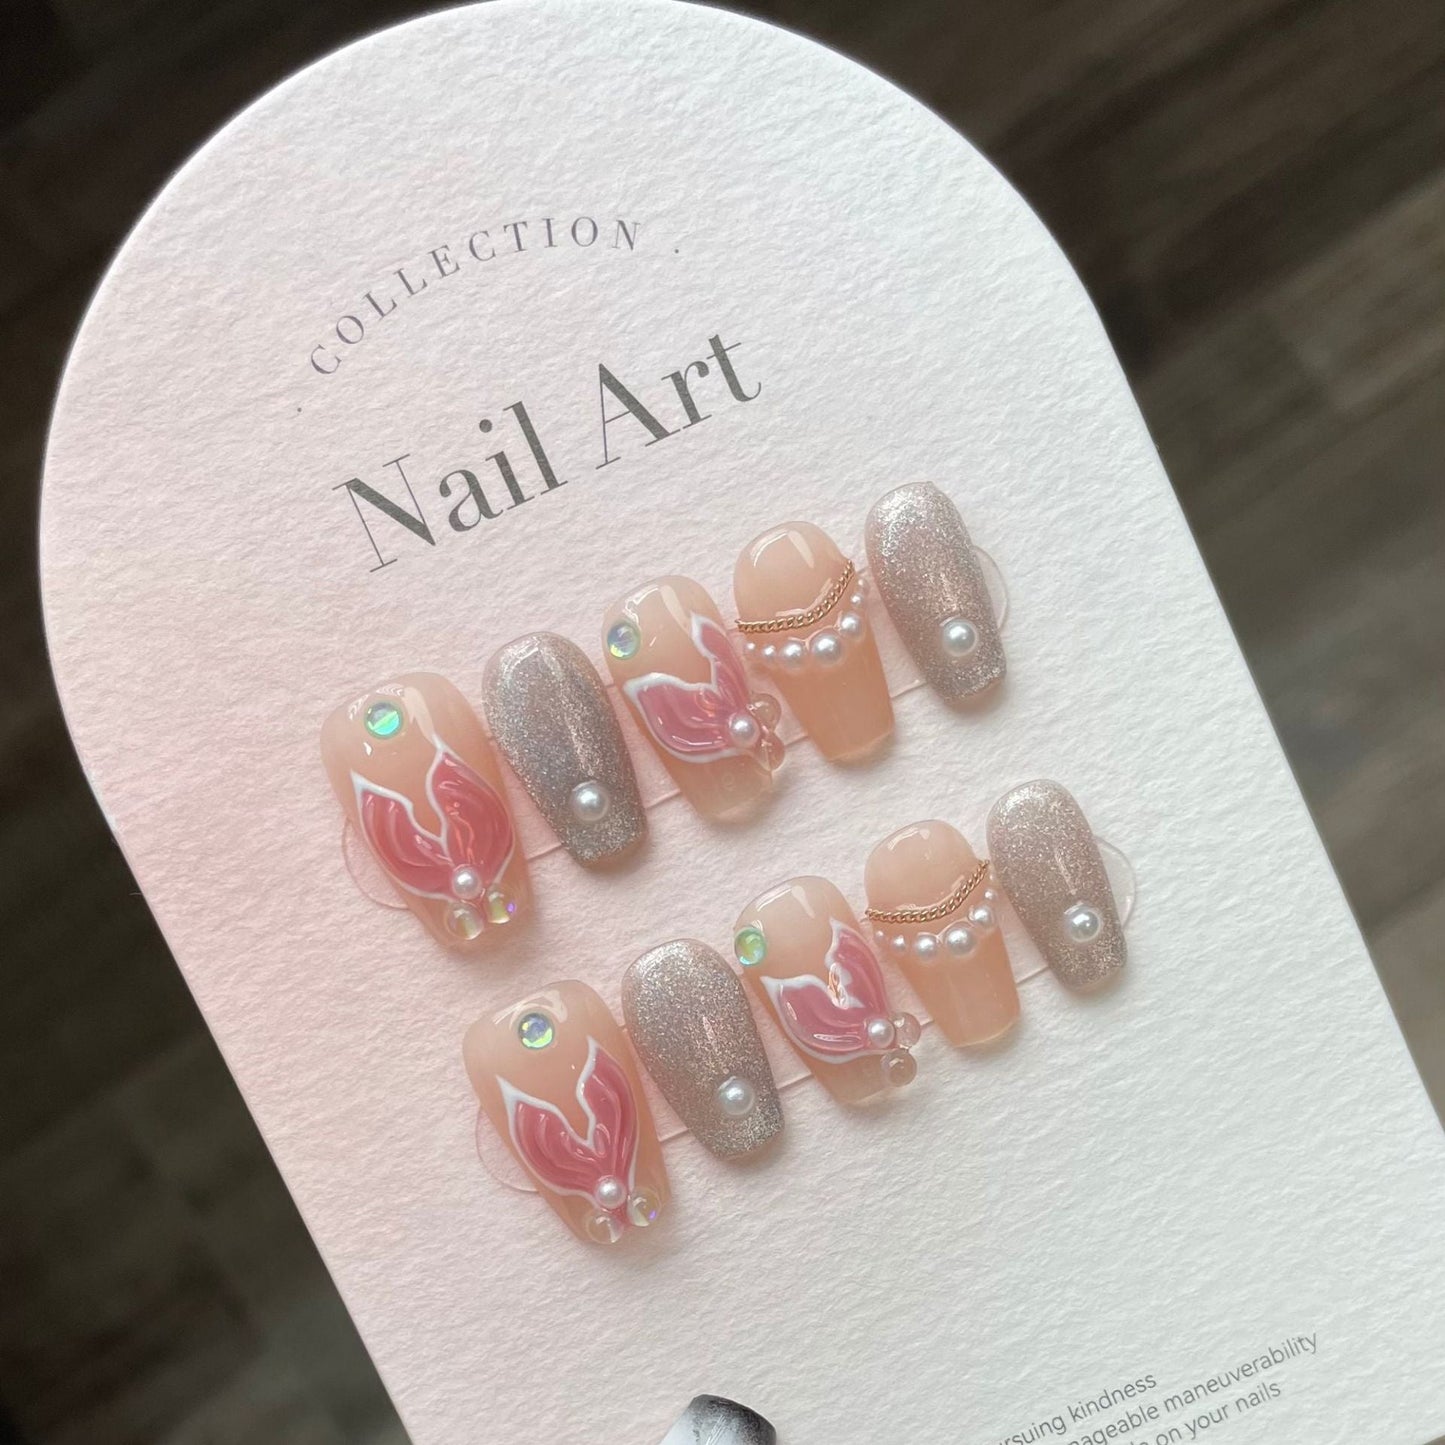 880/885/920 Mermaid Tail CatEye  Effect press on nails 100% handmade false nails pink sliver